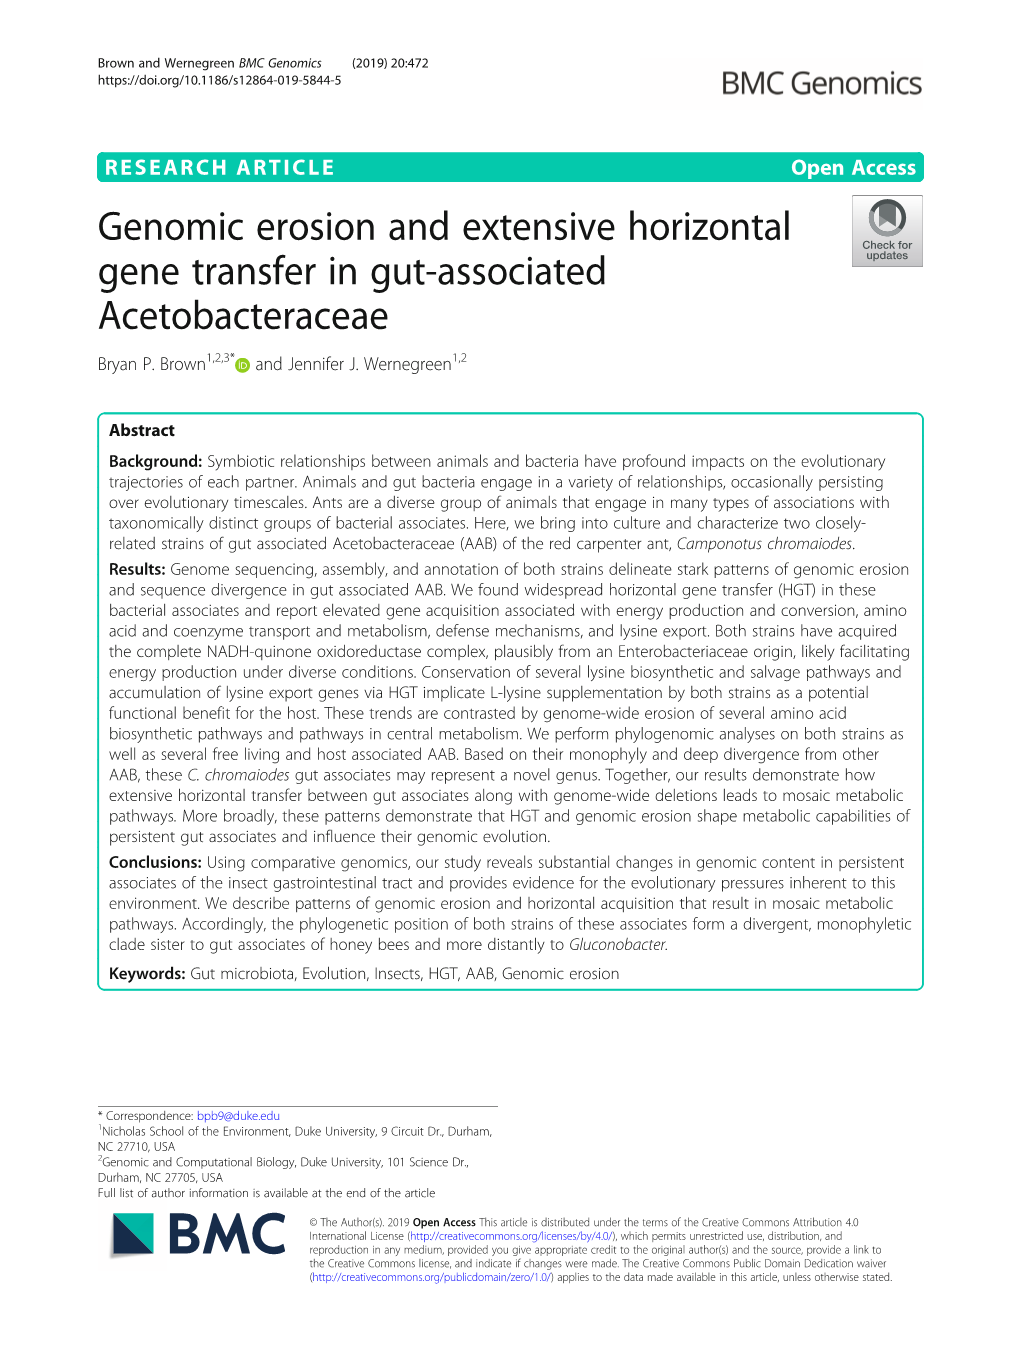 Genomic Erosion and Extensive Horizontal Gene Transfer in Gut-Associated Acetobacteraceae Bryan P